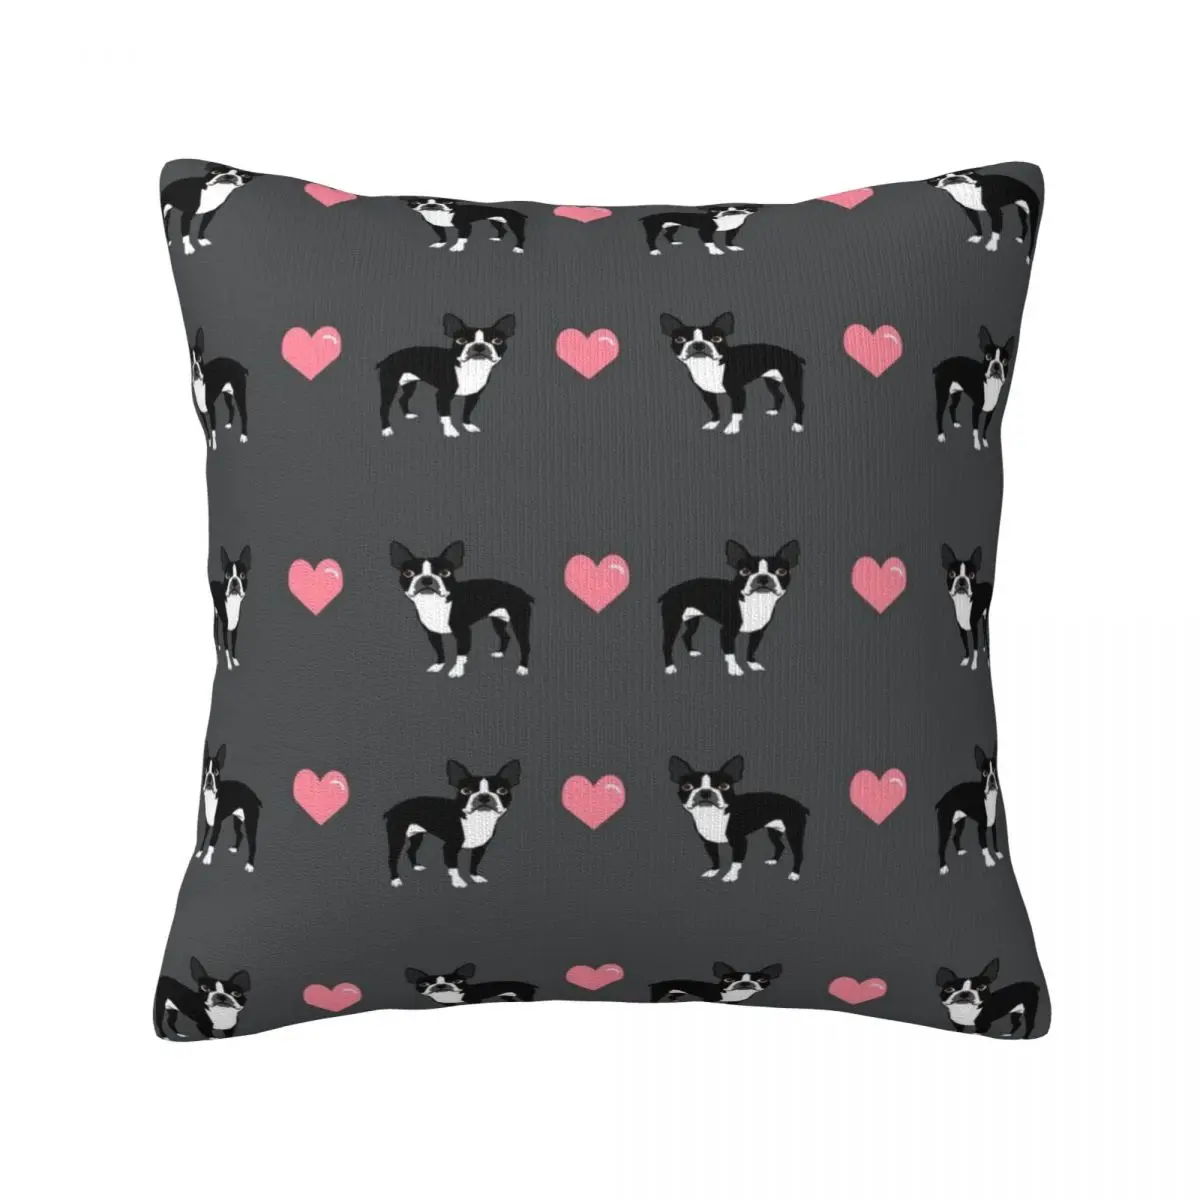 

Boston Terrier Love Hearts Throw Pillow Cover Decorative Pillow Covers Home Pillows Shells Cushion Cover Zippered Pillowcase